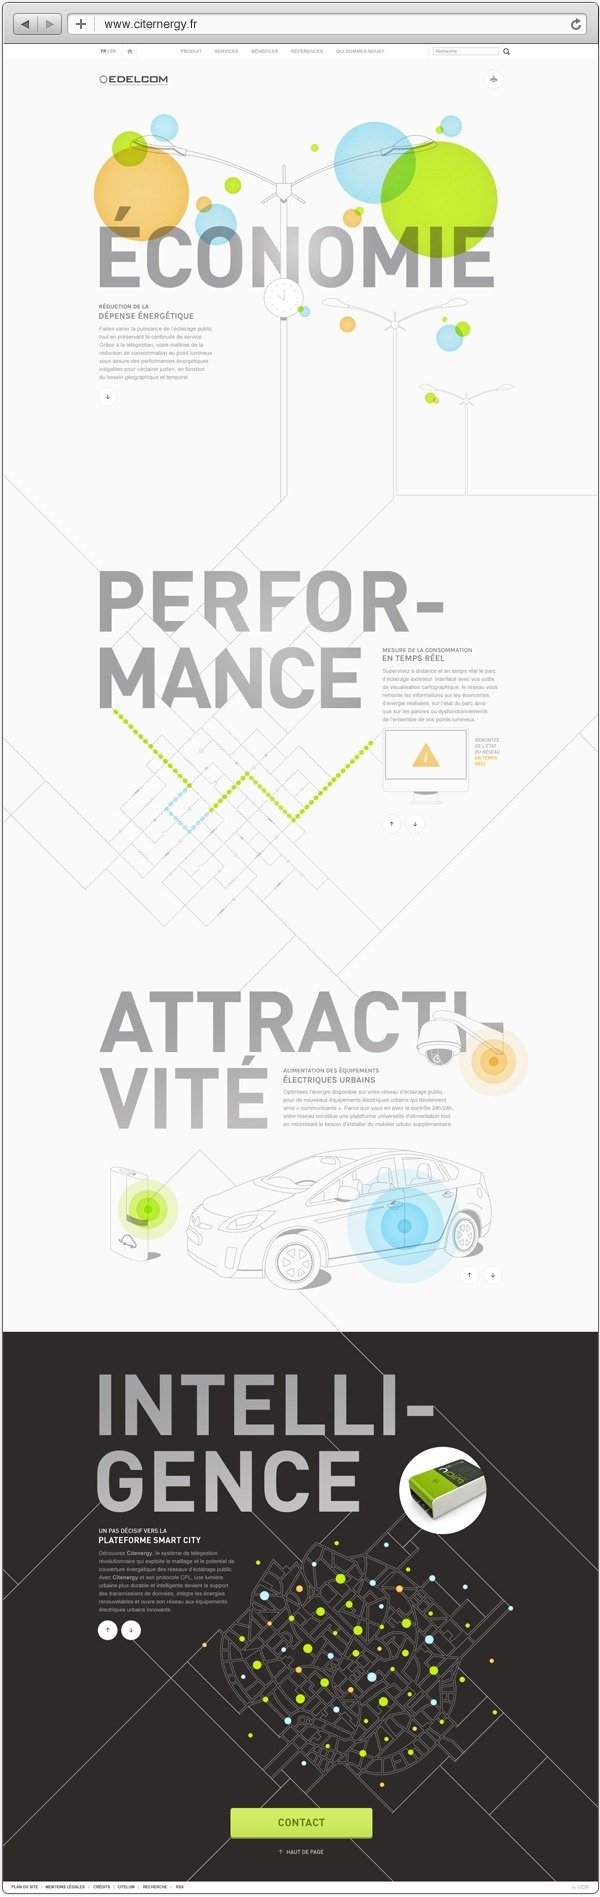 Citenergy on Web Design Served #infographics #web